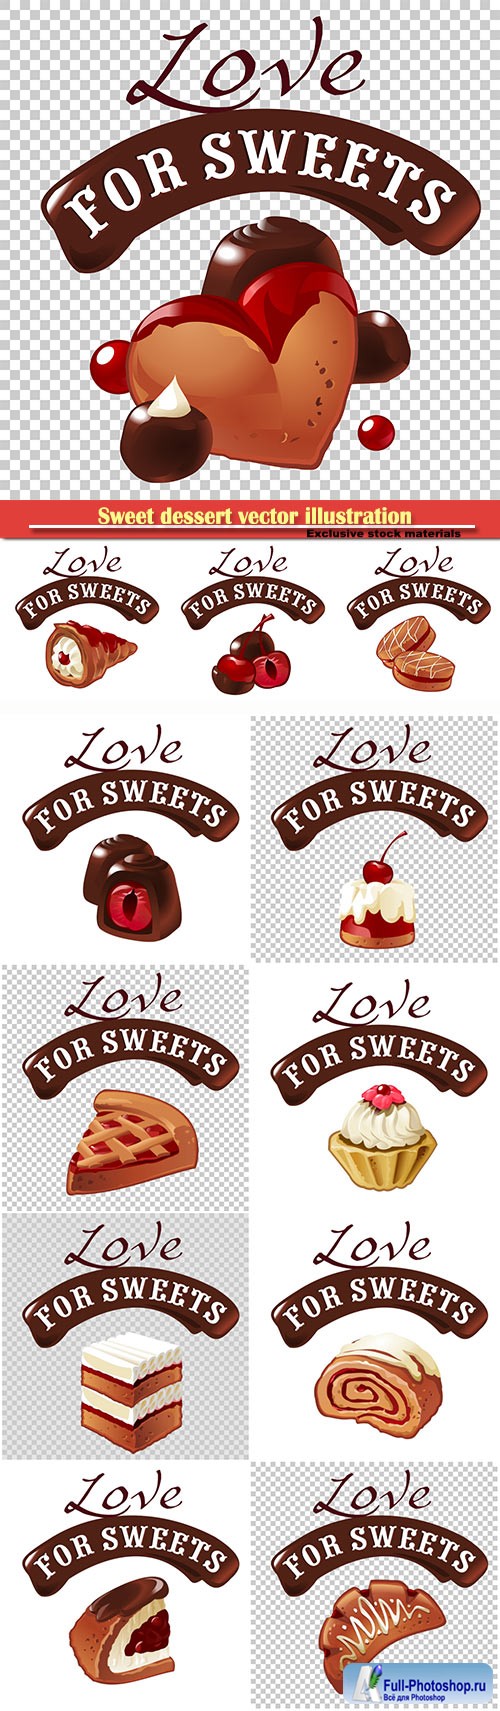 Sweet dessert vector illustration on a white background